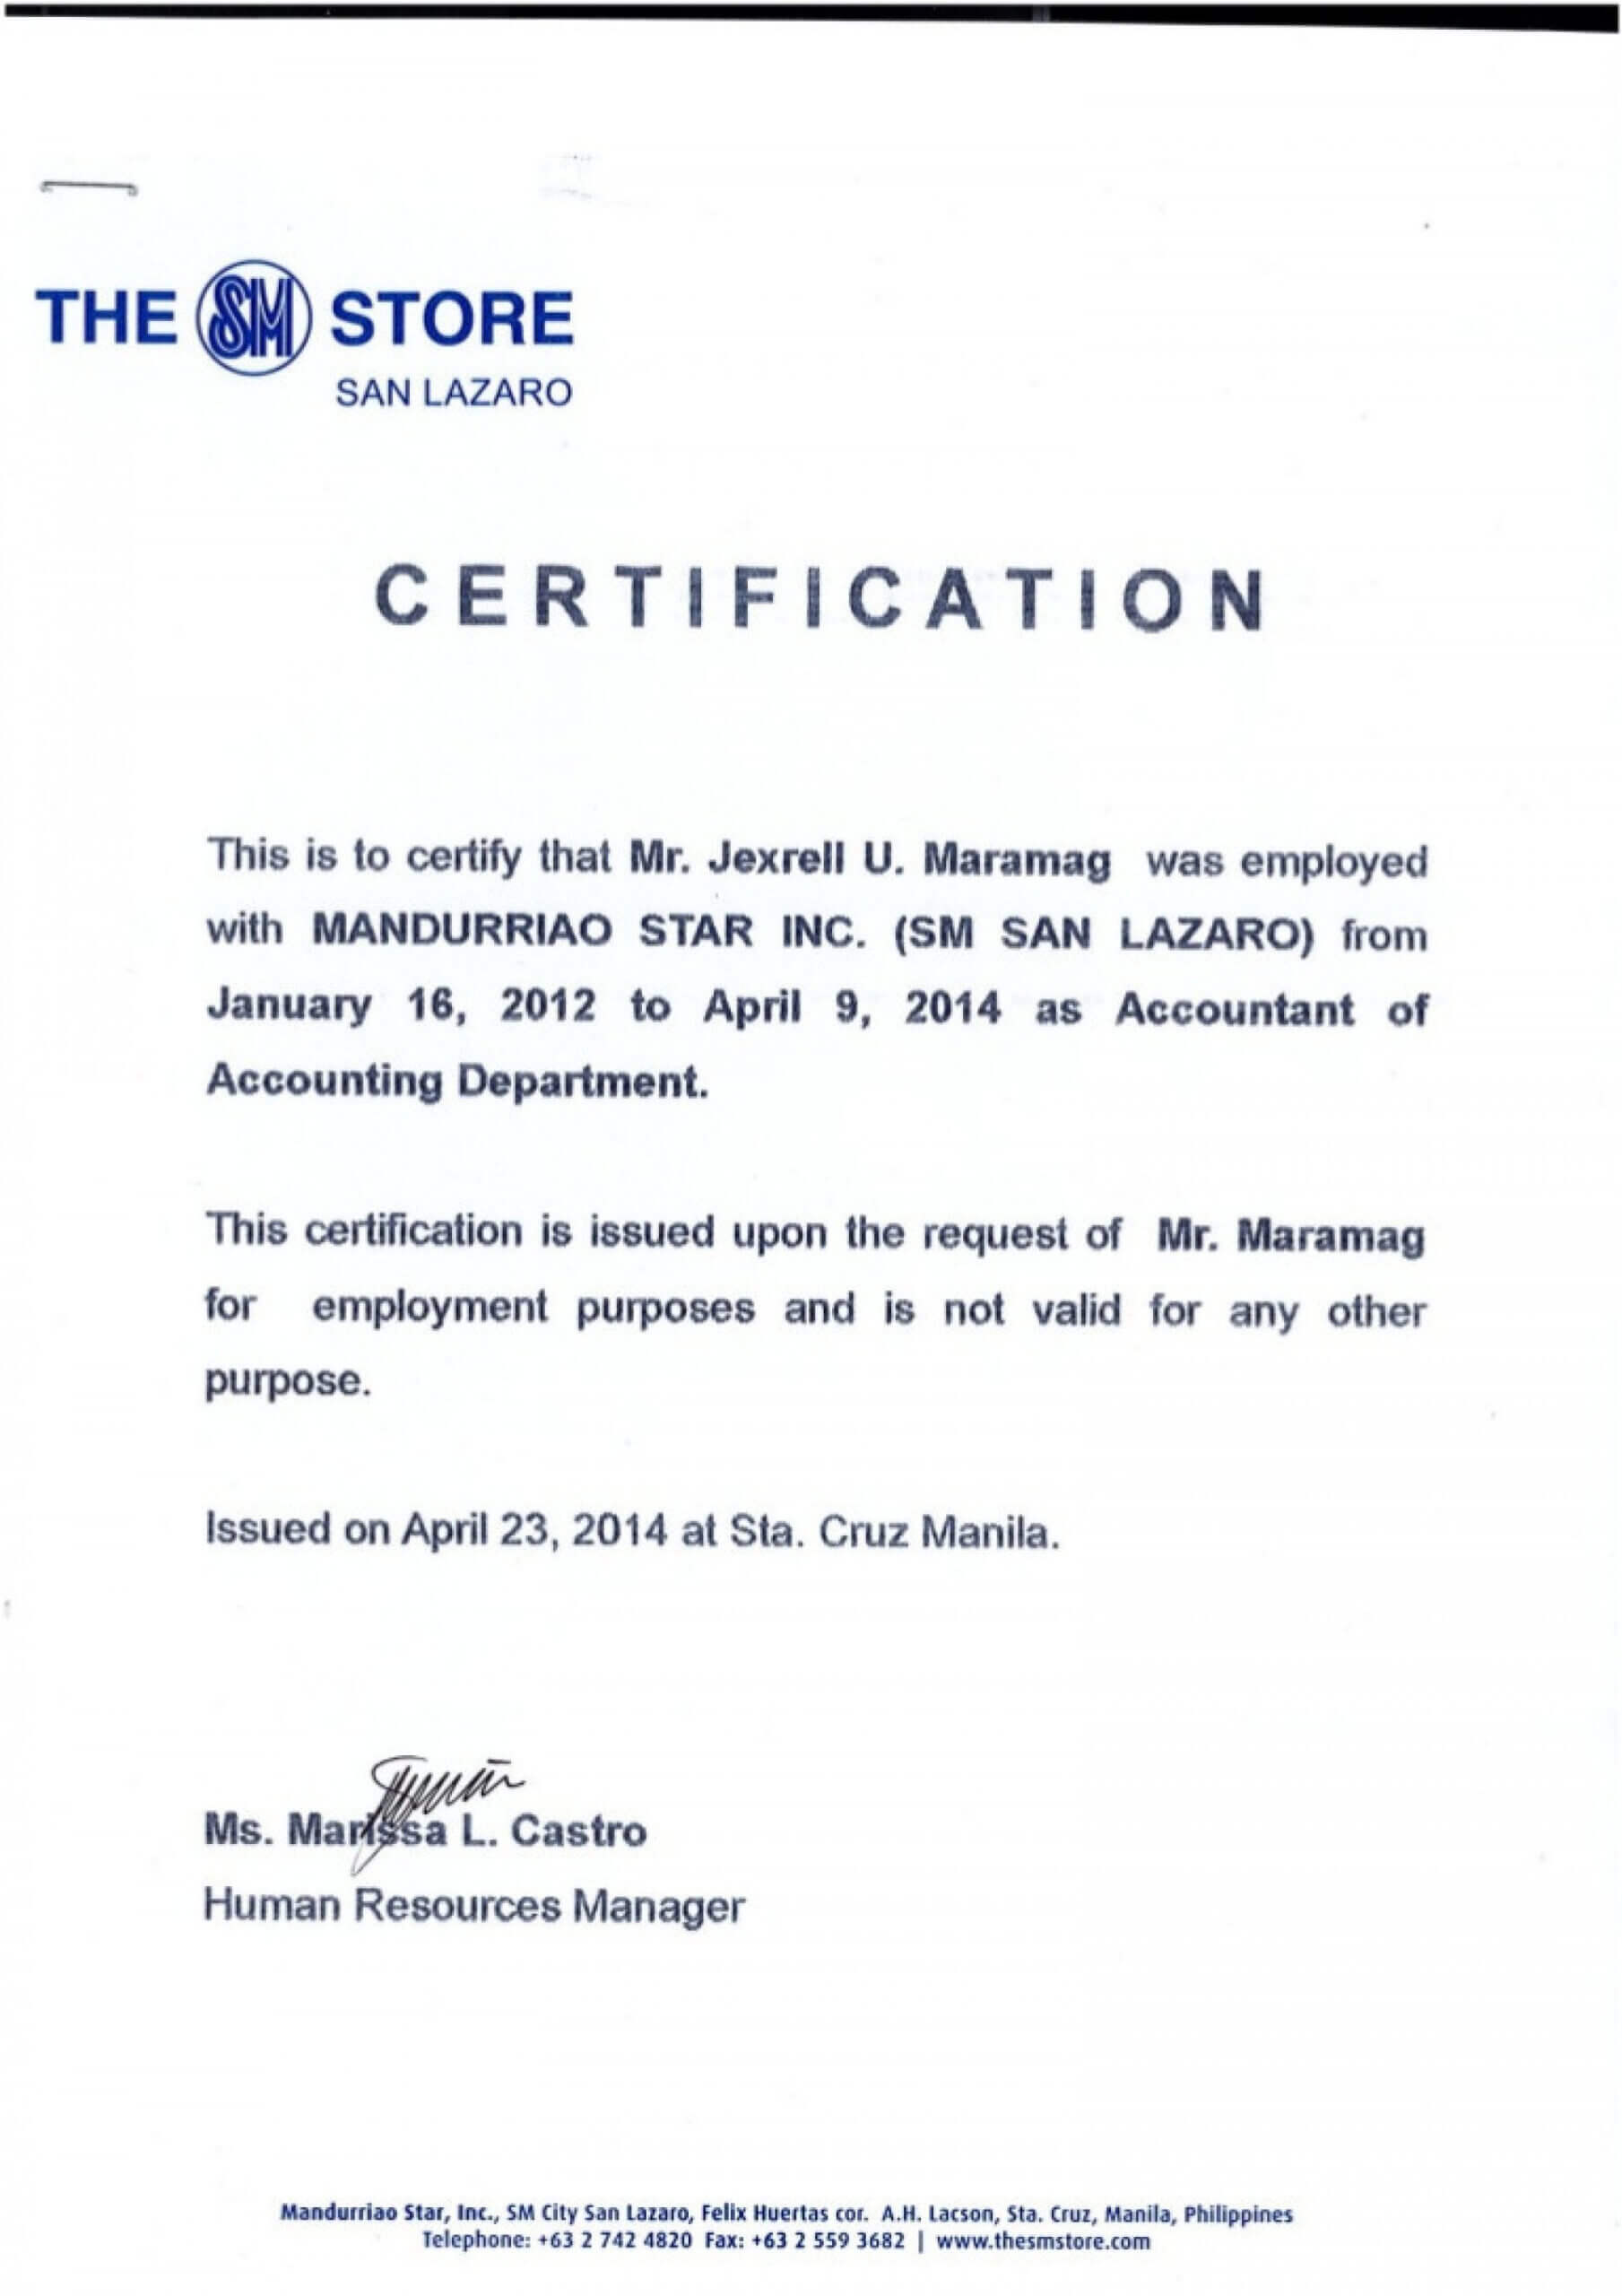 046 Certificate Of Employment Template Ideas Employee The With Certificate Of Employment Template